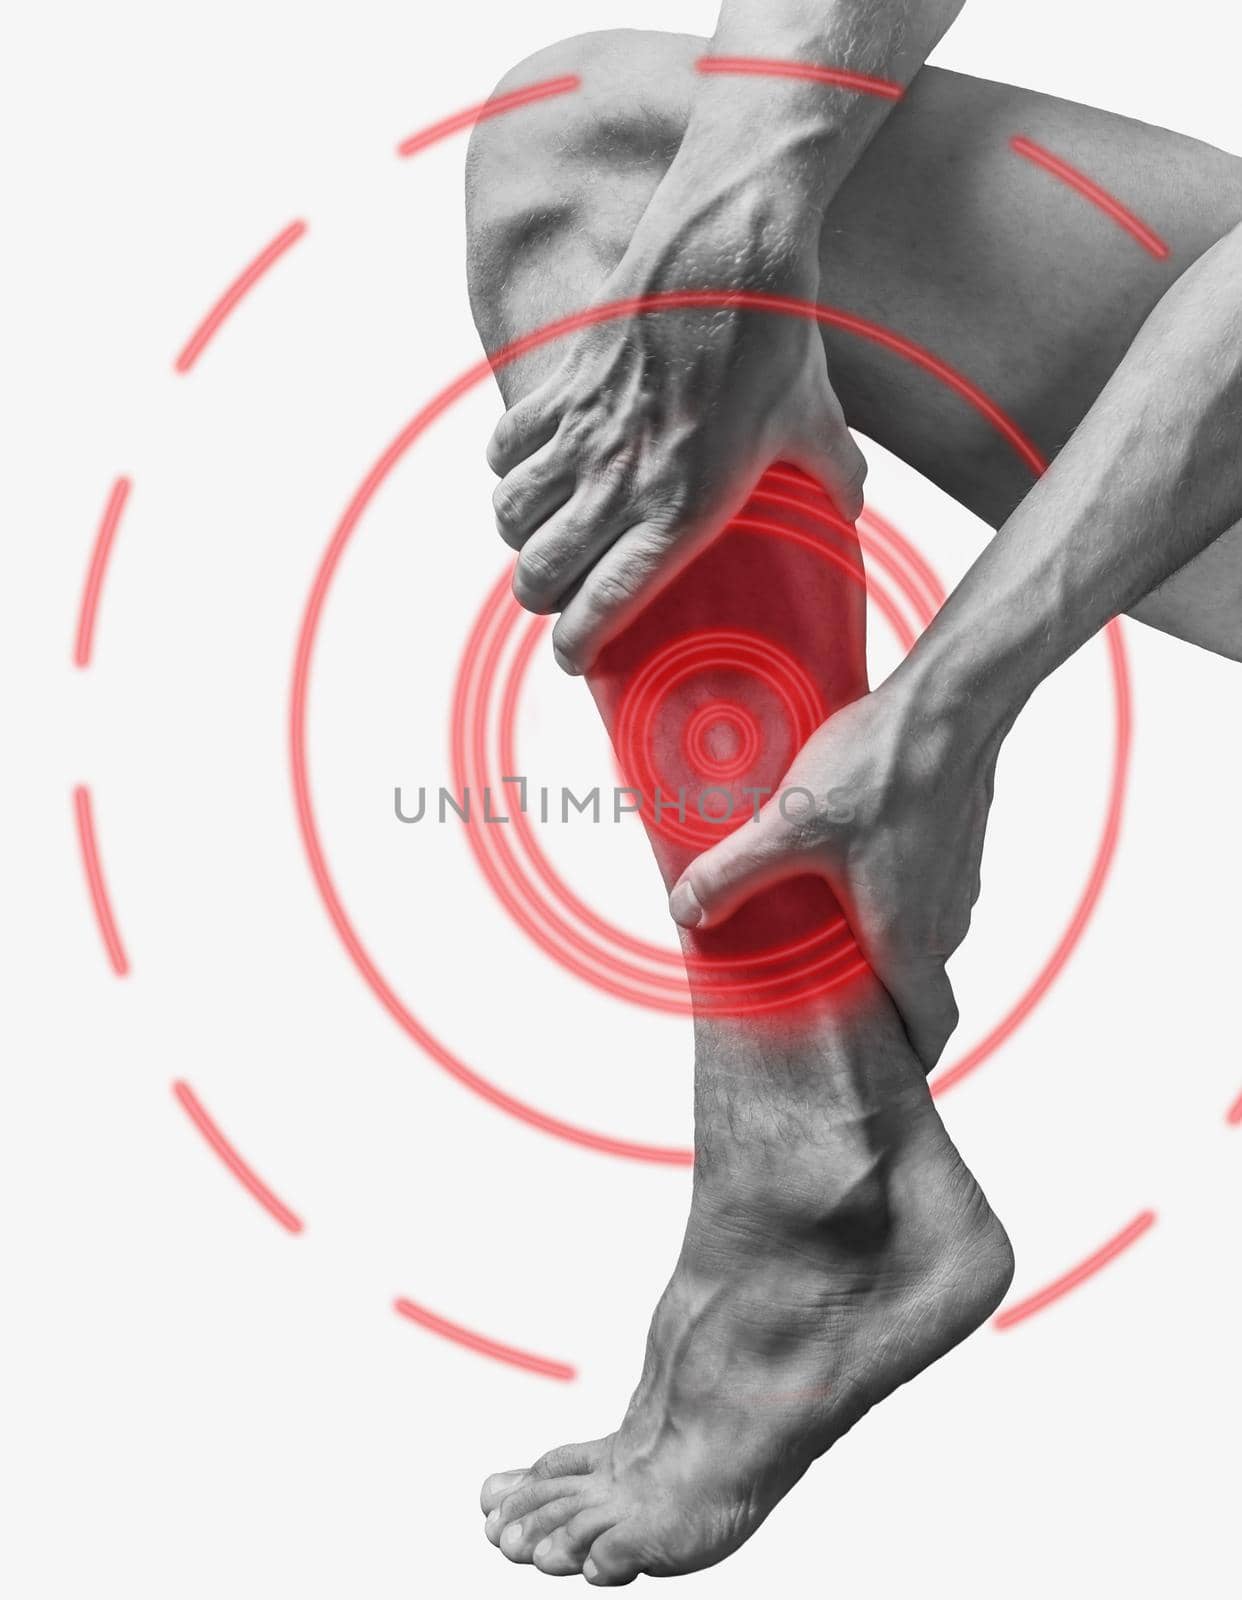 Acute pain in a calf muscle. by alexAleksei